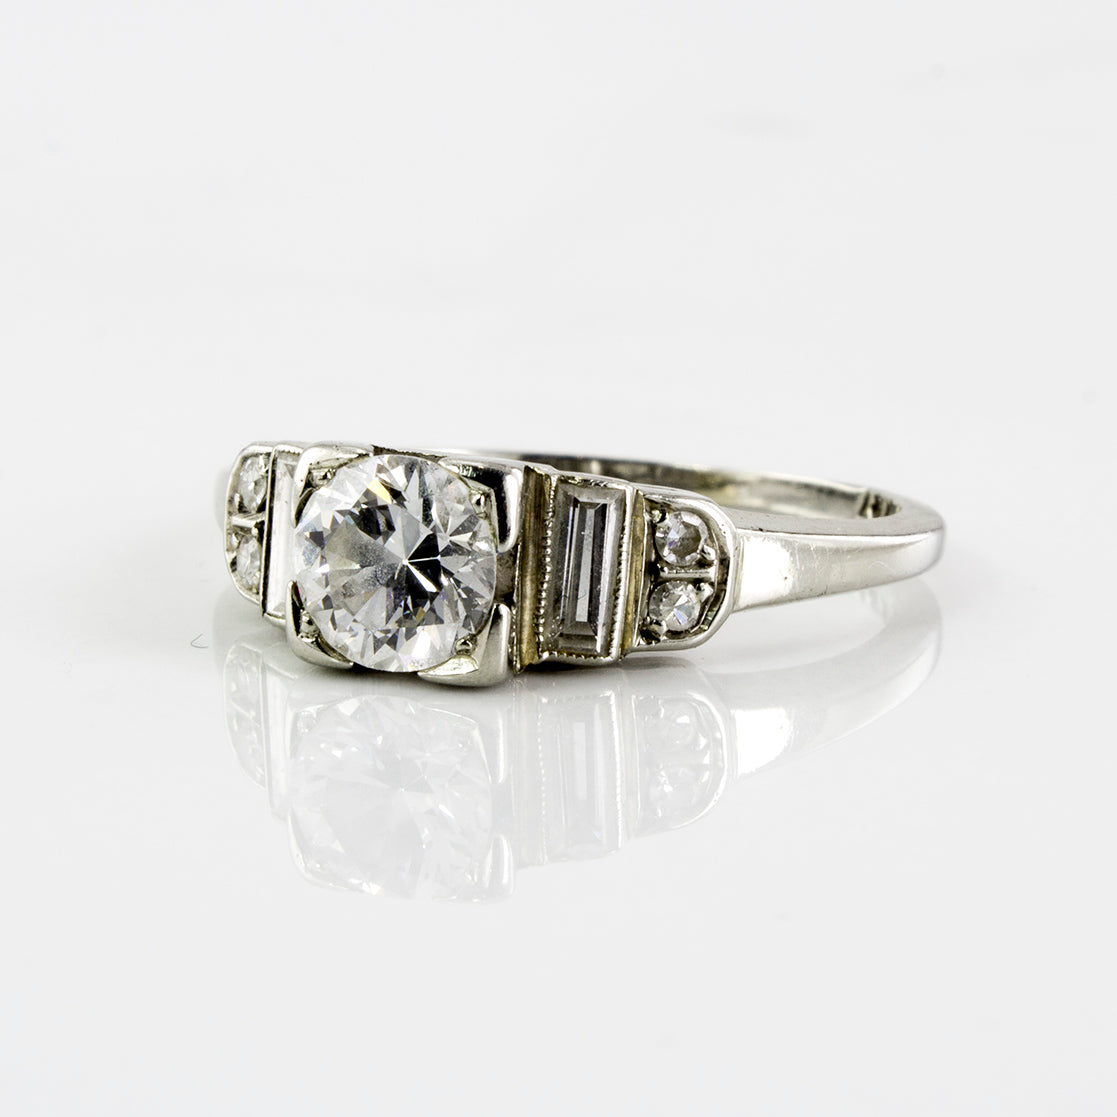 Late Art Deco Era Diamond Engagement Ring | 0.64 ctw | SZ 5.5 |